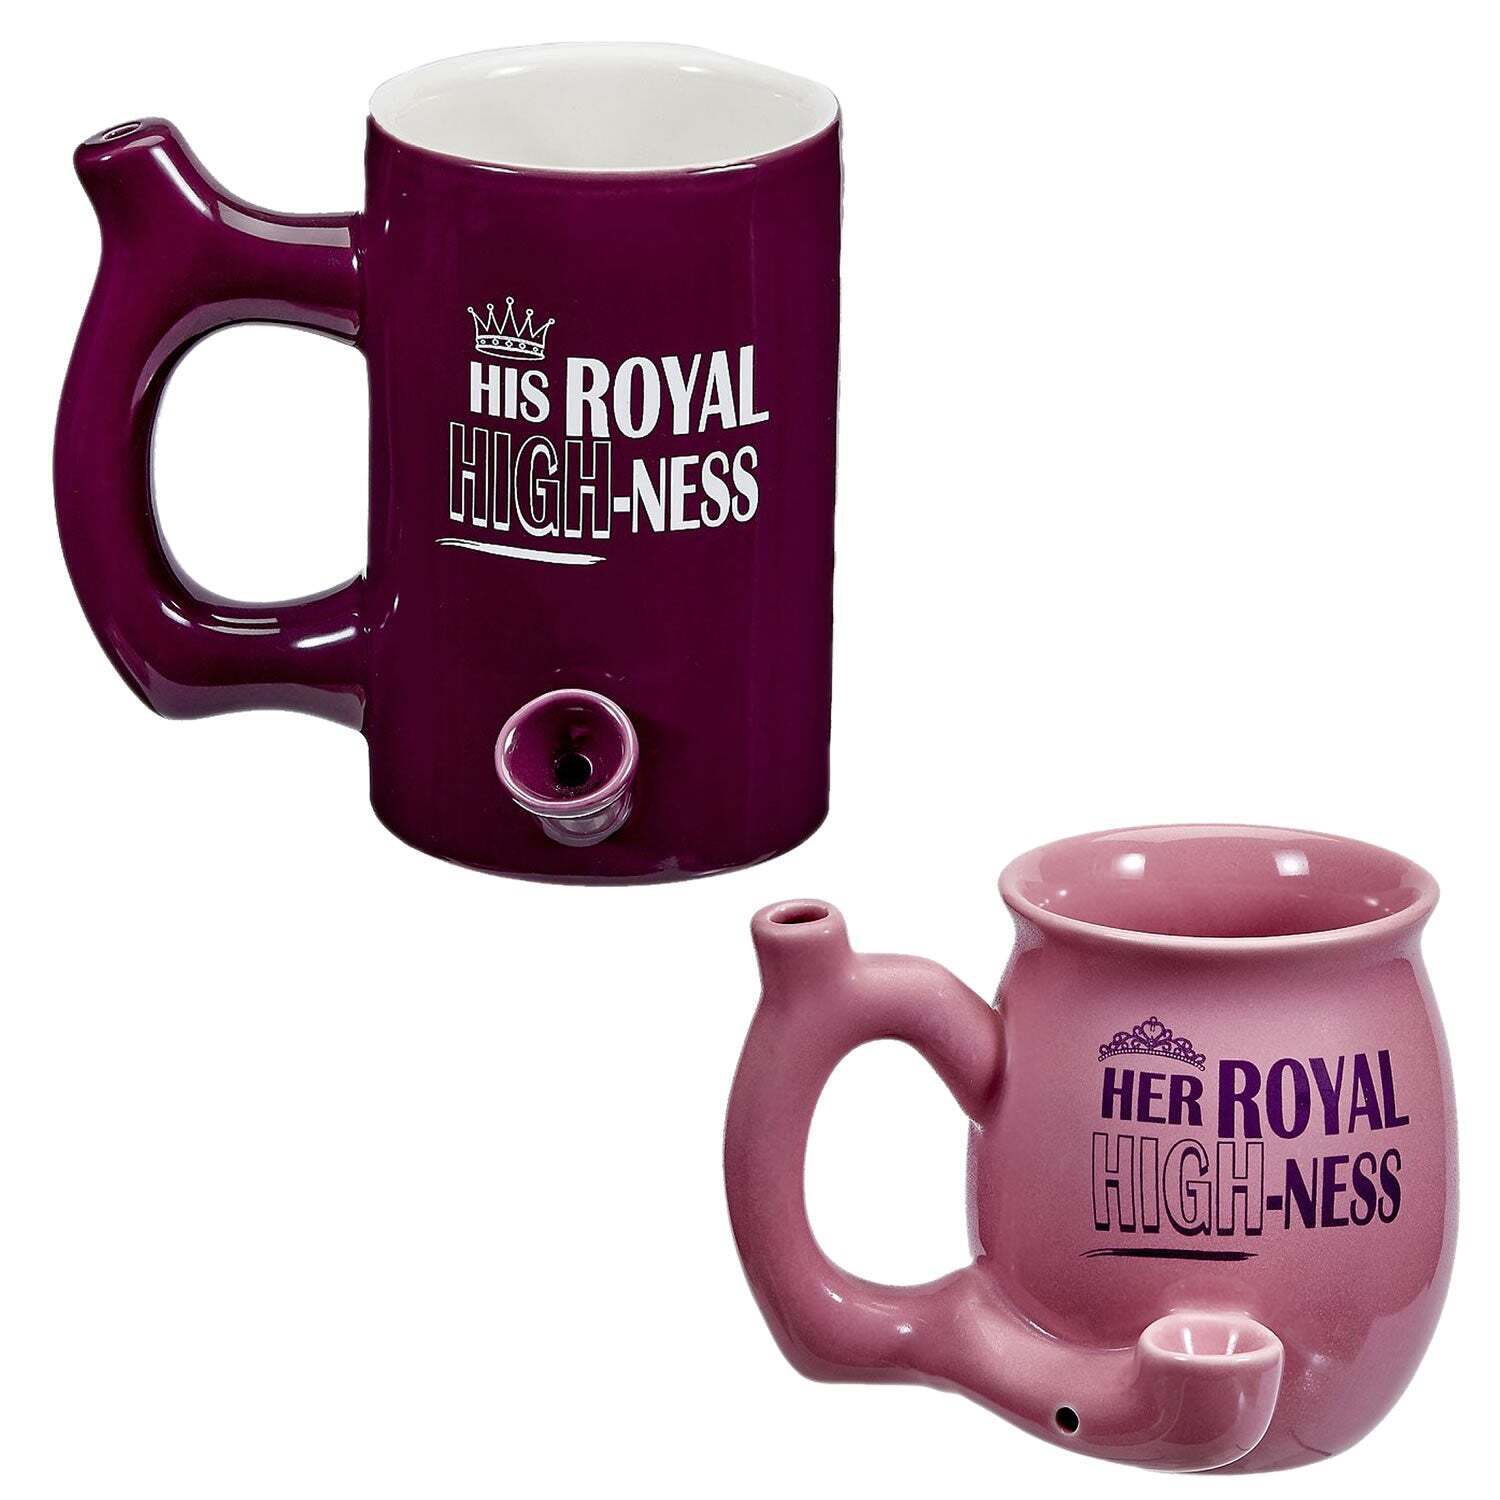 her royal and his royal highness pipe mugs